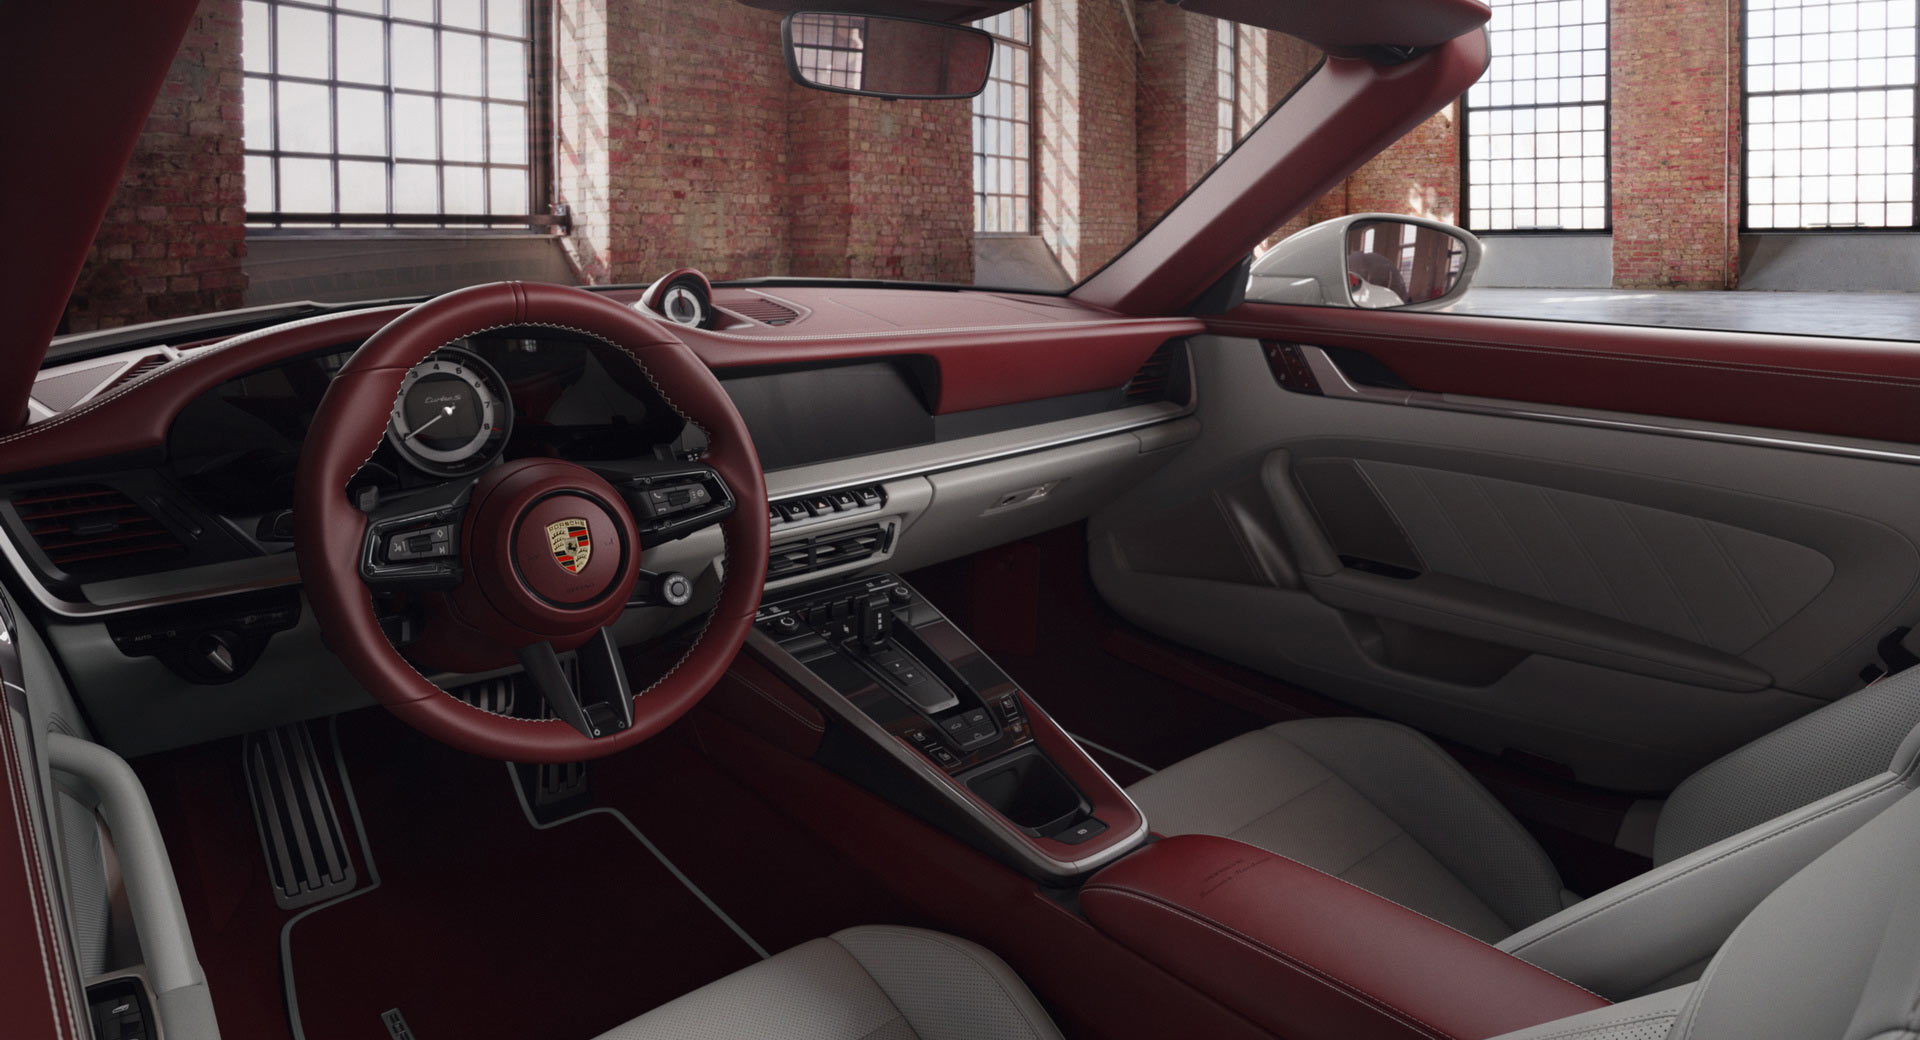 The Perfect 911 Interior According To Porsche Exclusive | Carscoops